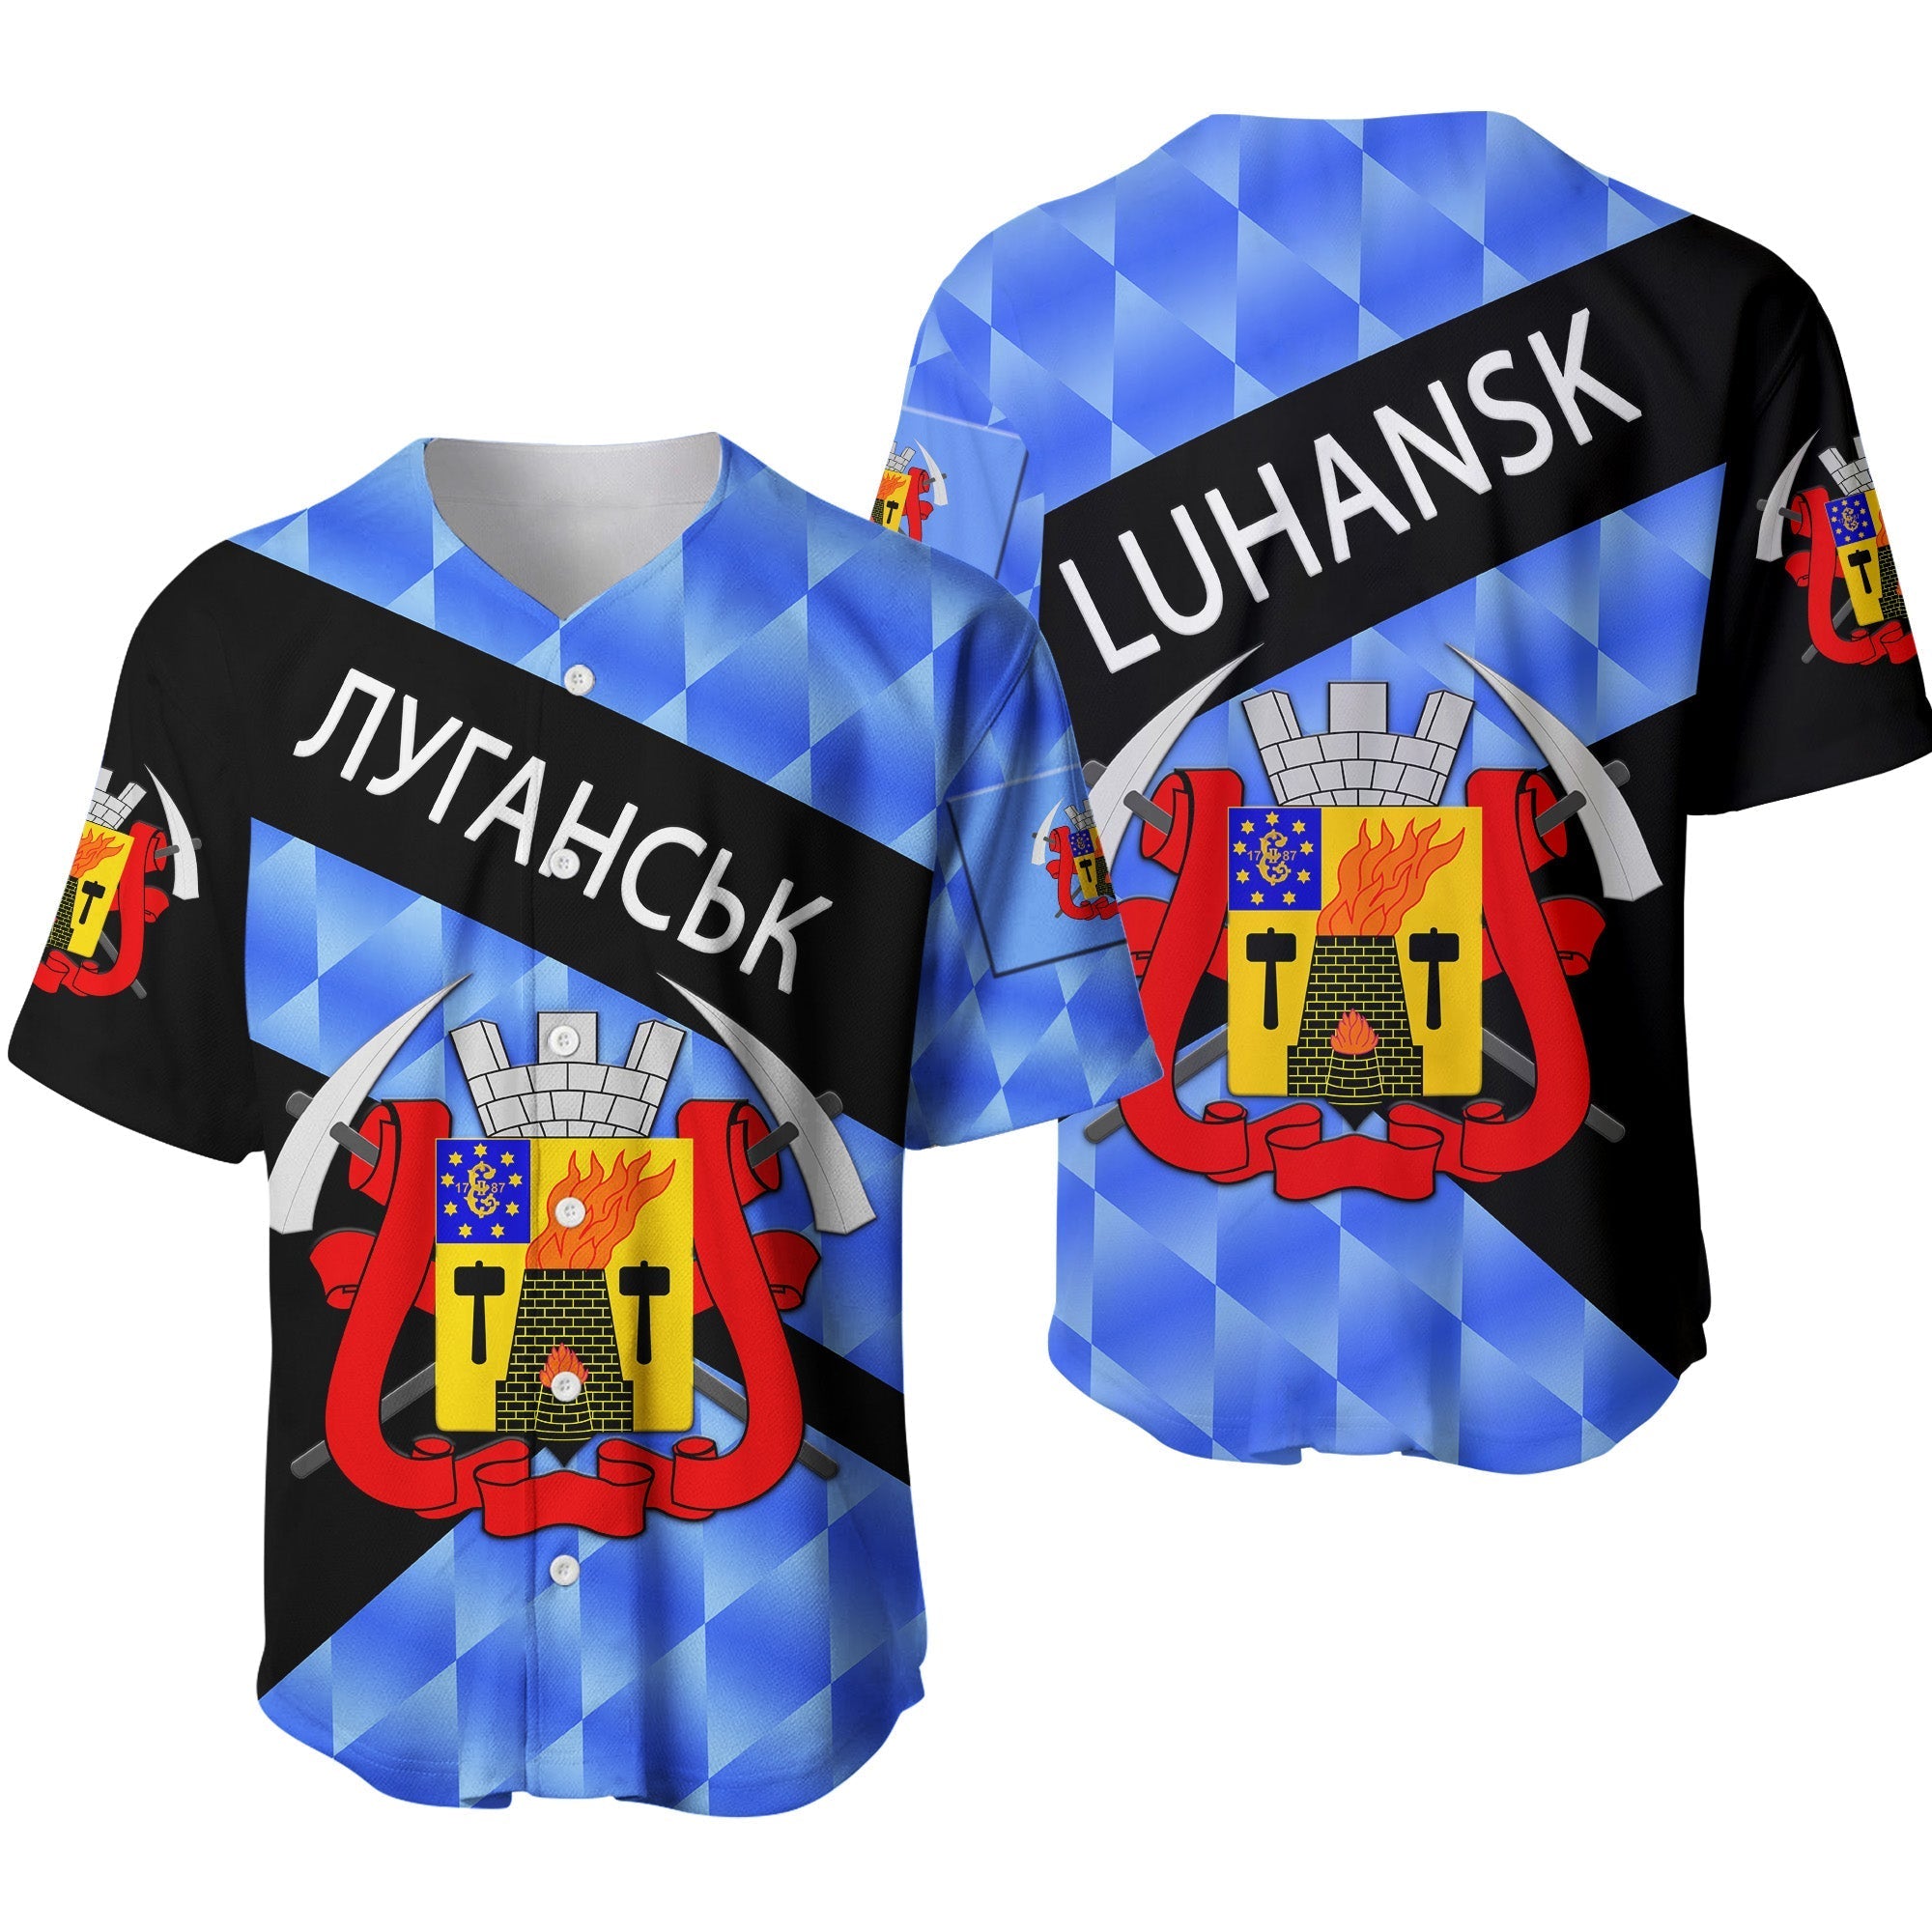 ukraine-luhansk-baseball-jersey-sporty-style